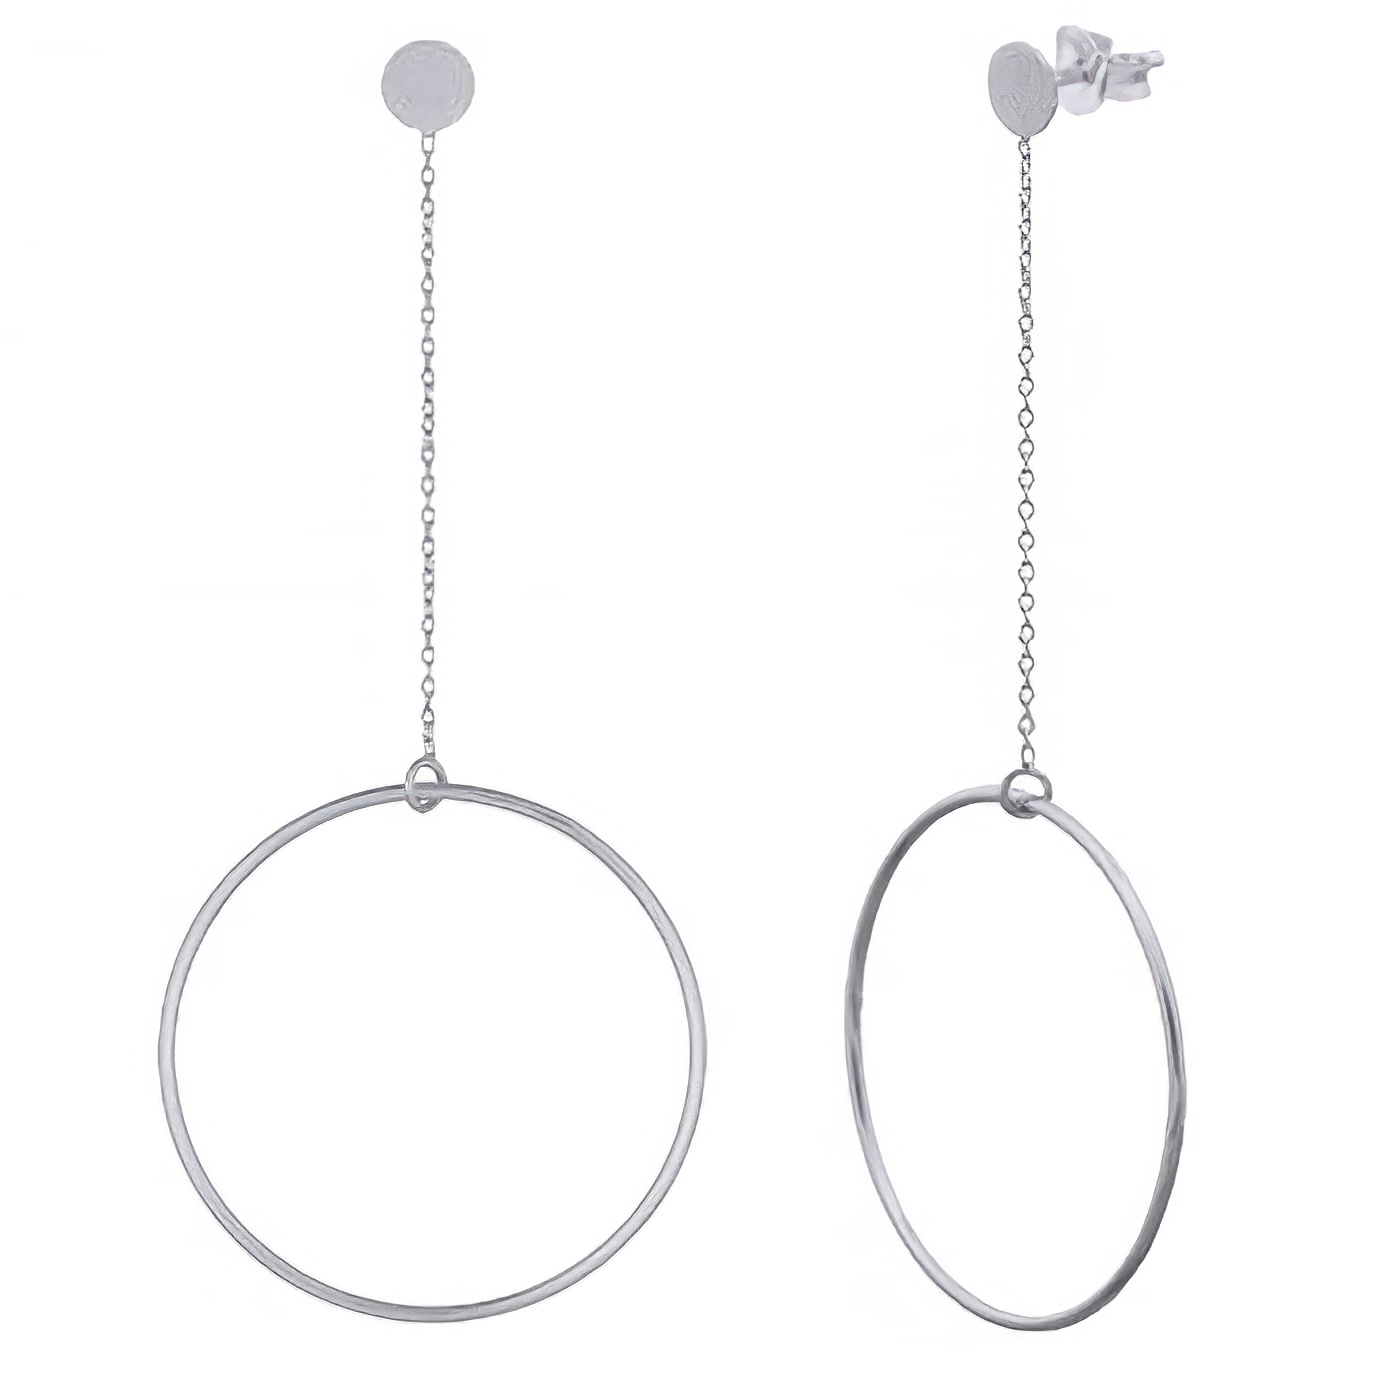 Circle Swing Silver Plated Stud Earrings by BeYindi 